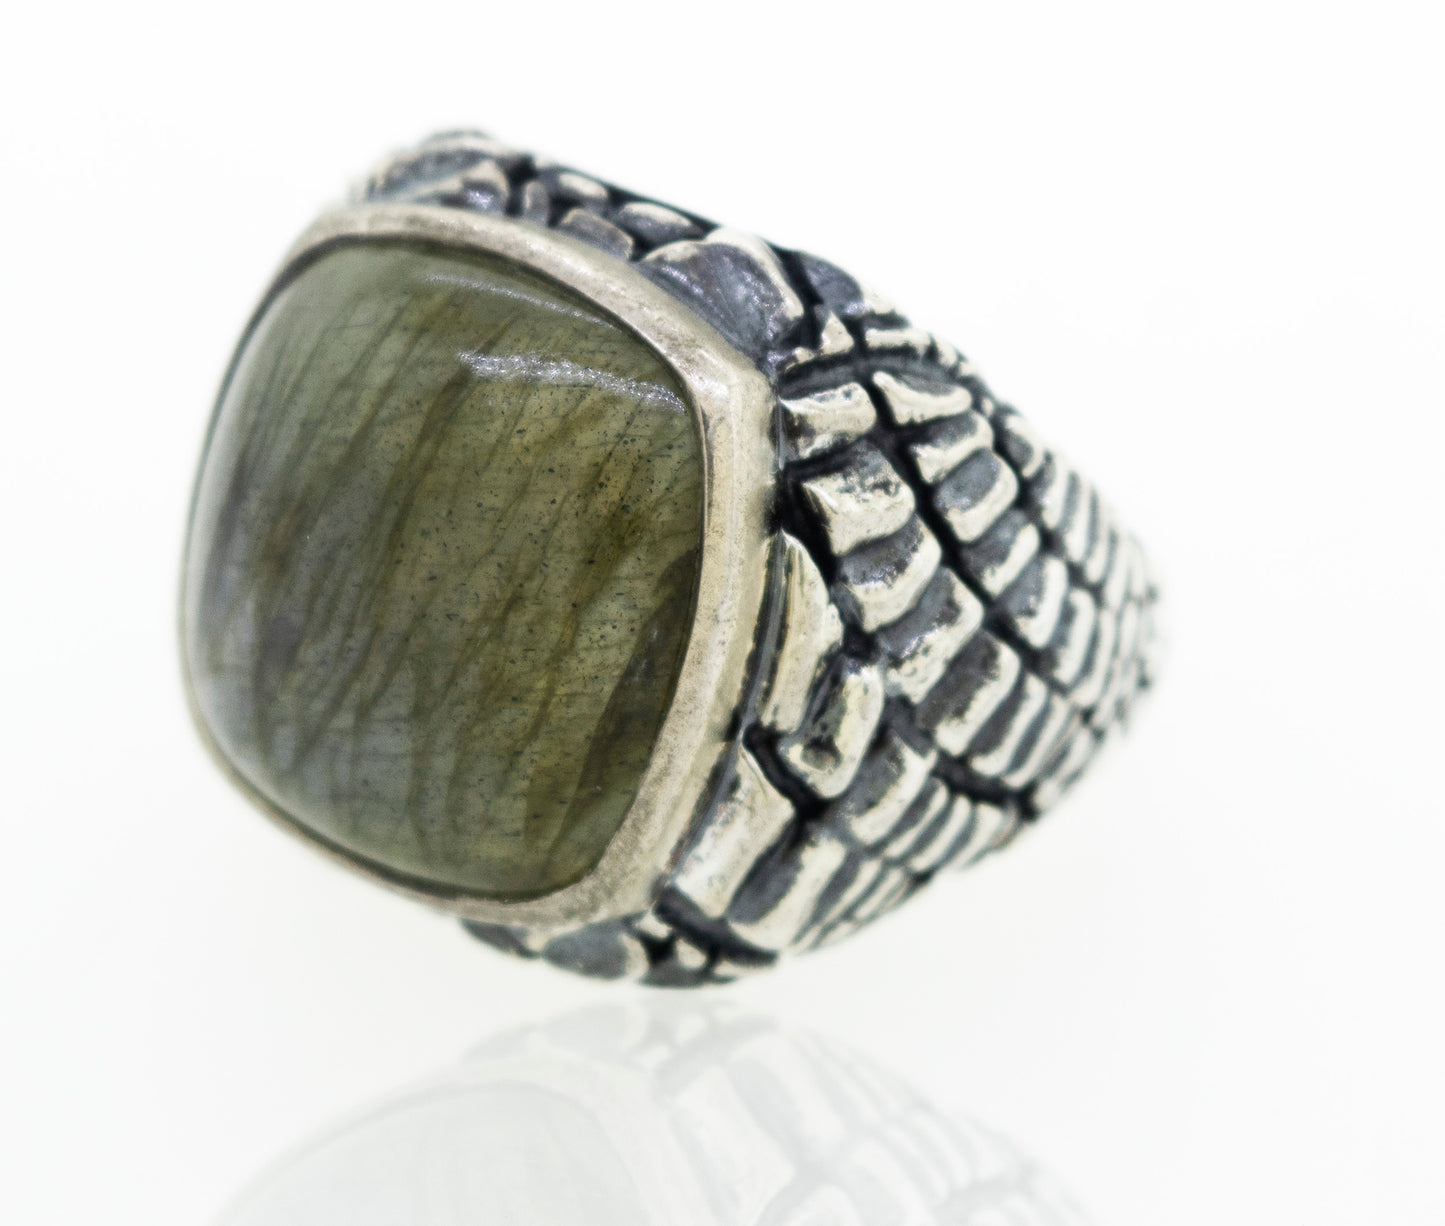 A minimalist silver Heavy Signet Labradorite Ring with a labradorite stone.